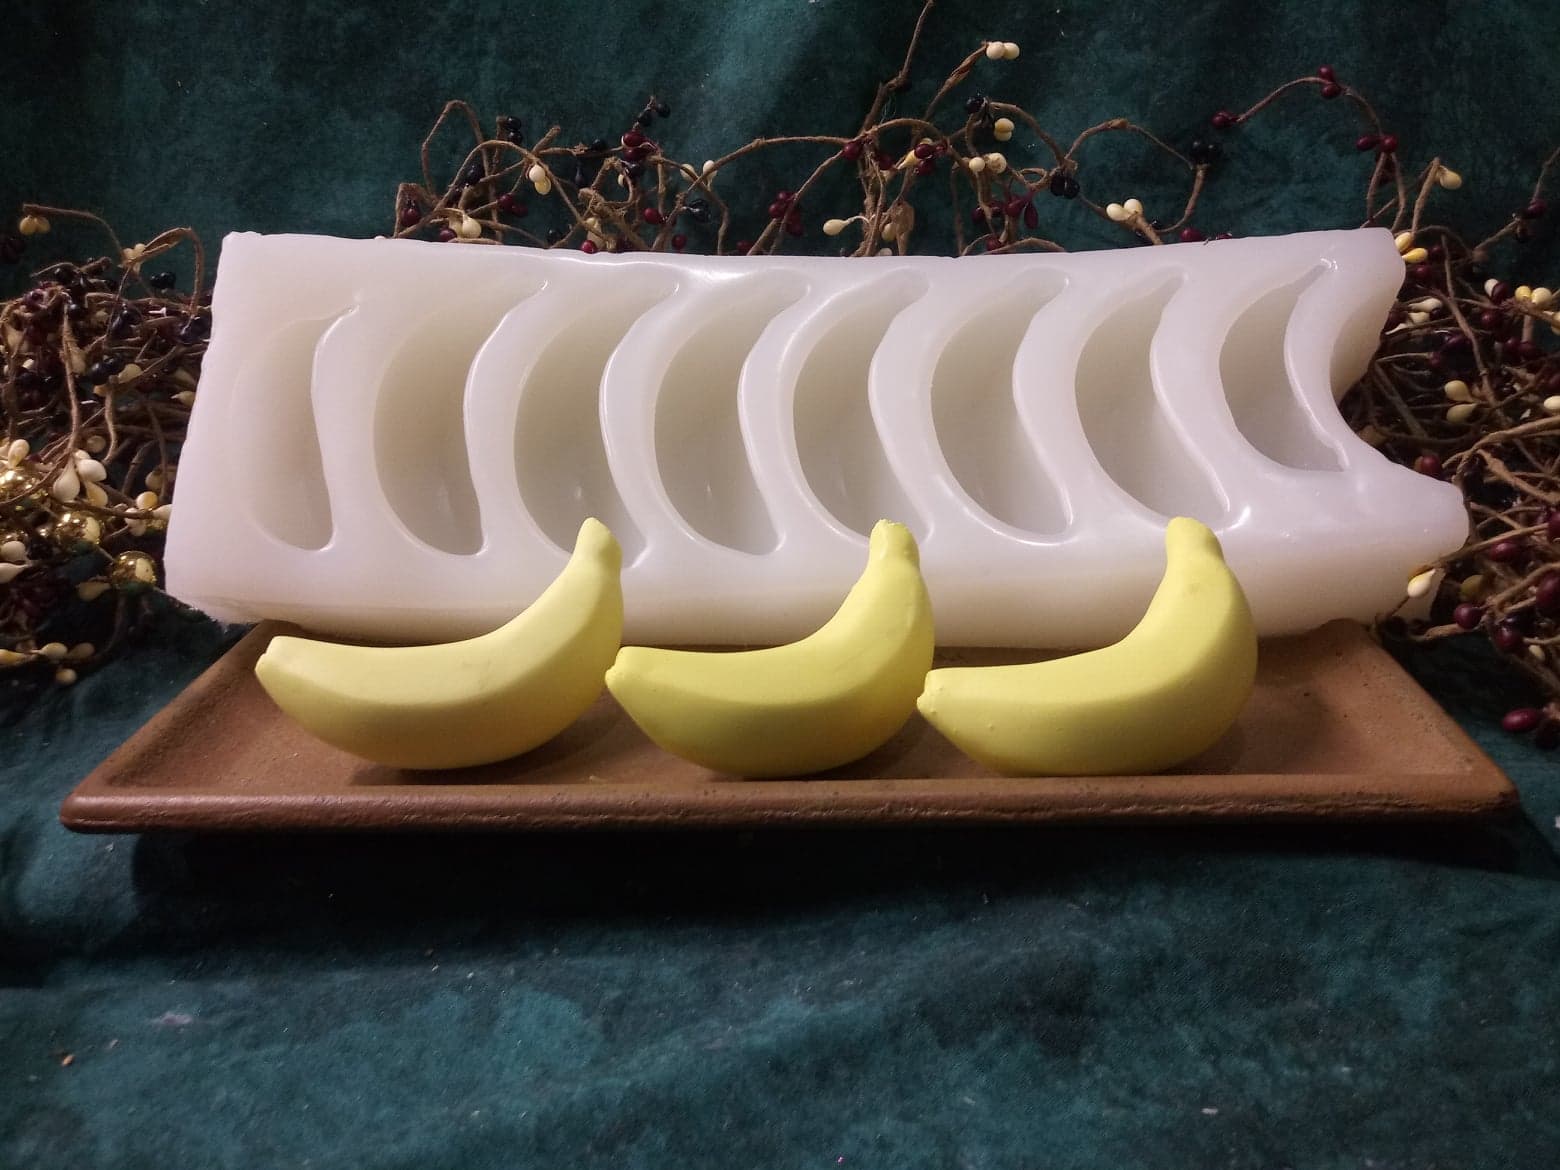 https://www.vanyulay.com/wp-content/uploads/2019/10/banana-8-cav-mold-with-embeds.jpg